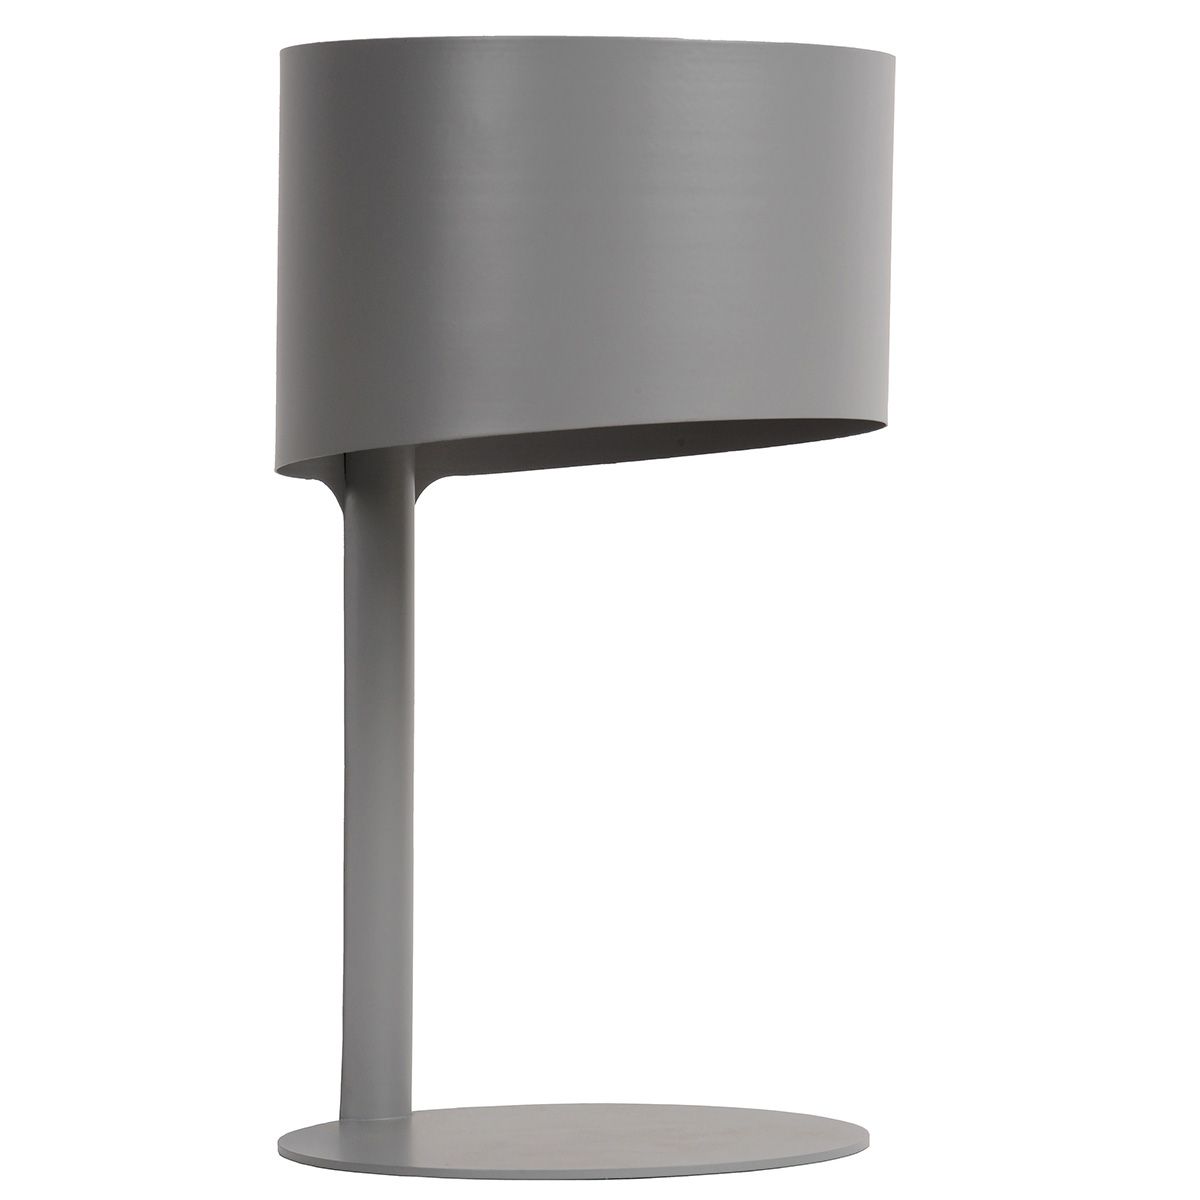 Lampe design KNULLE grise taupe en métal